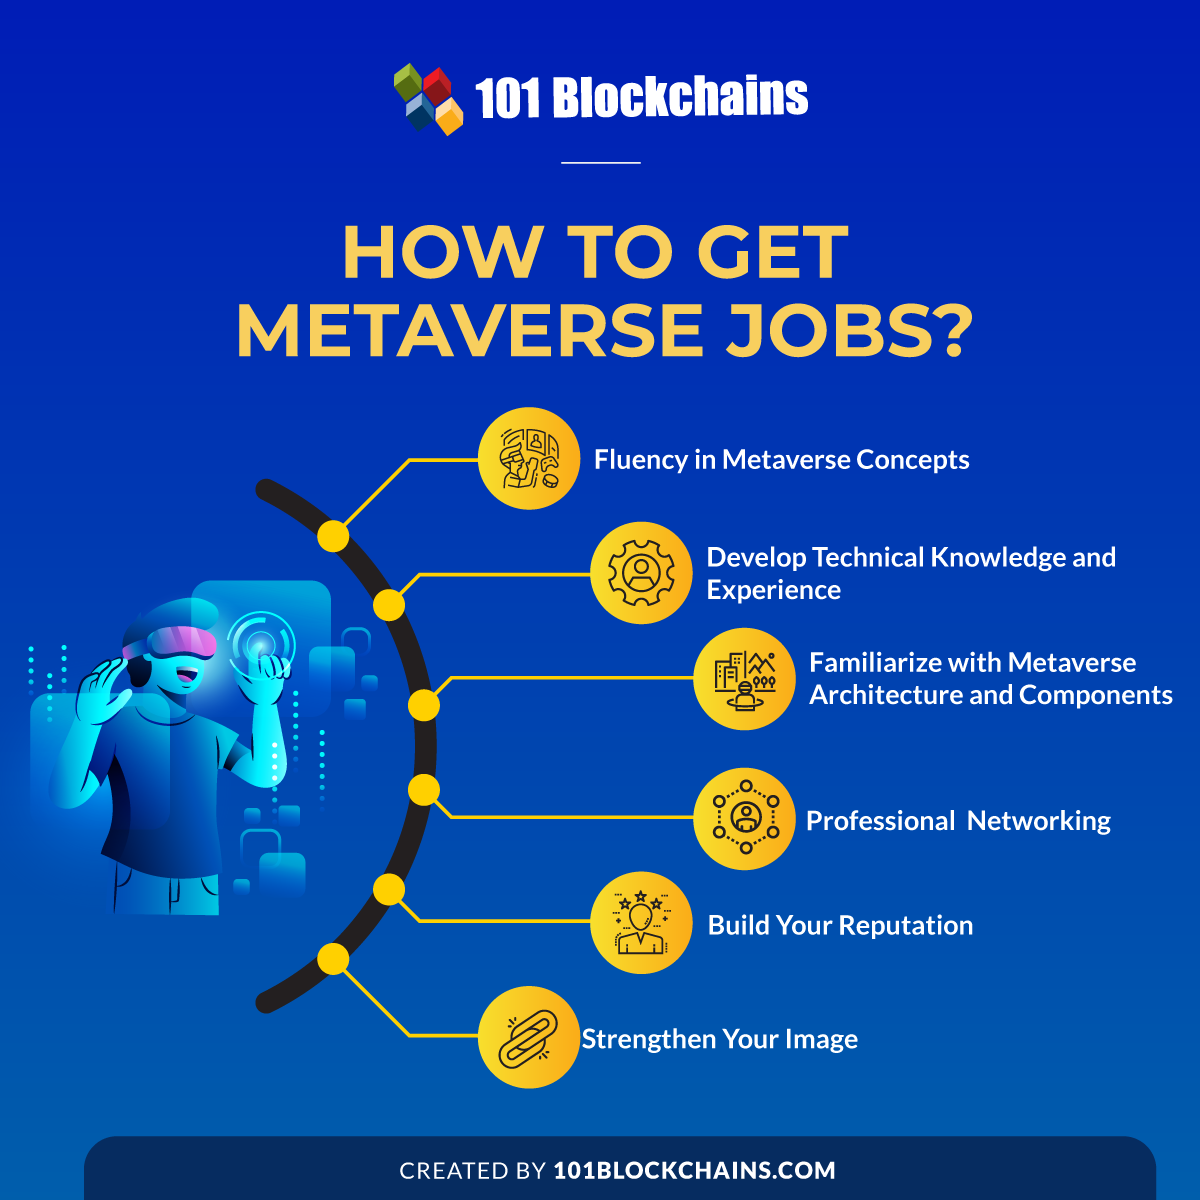 How to Get Metaverse Jobs